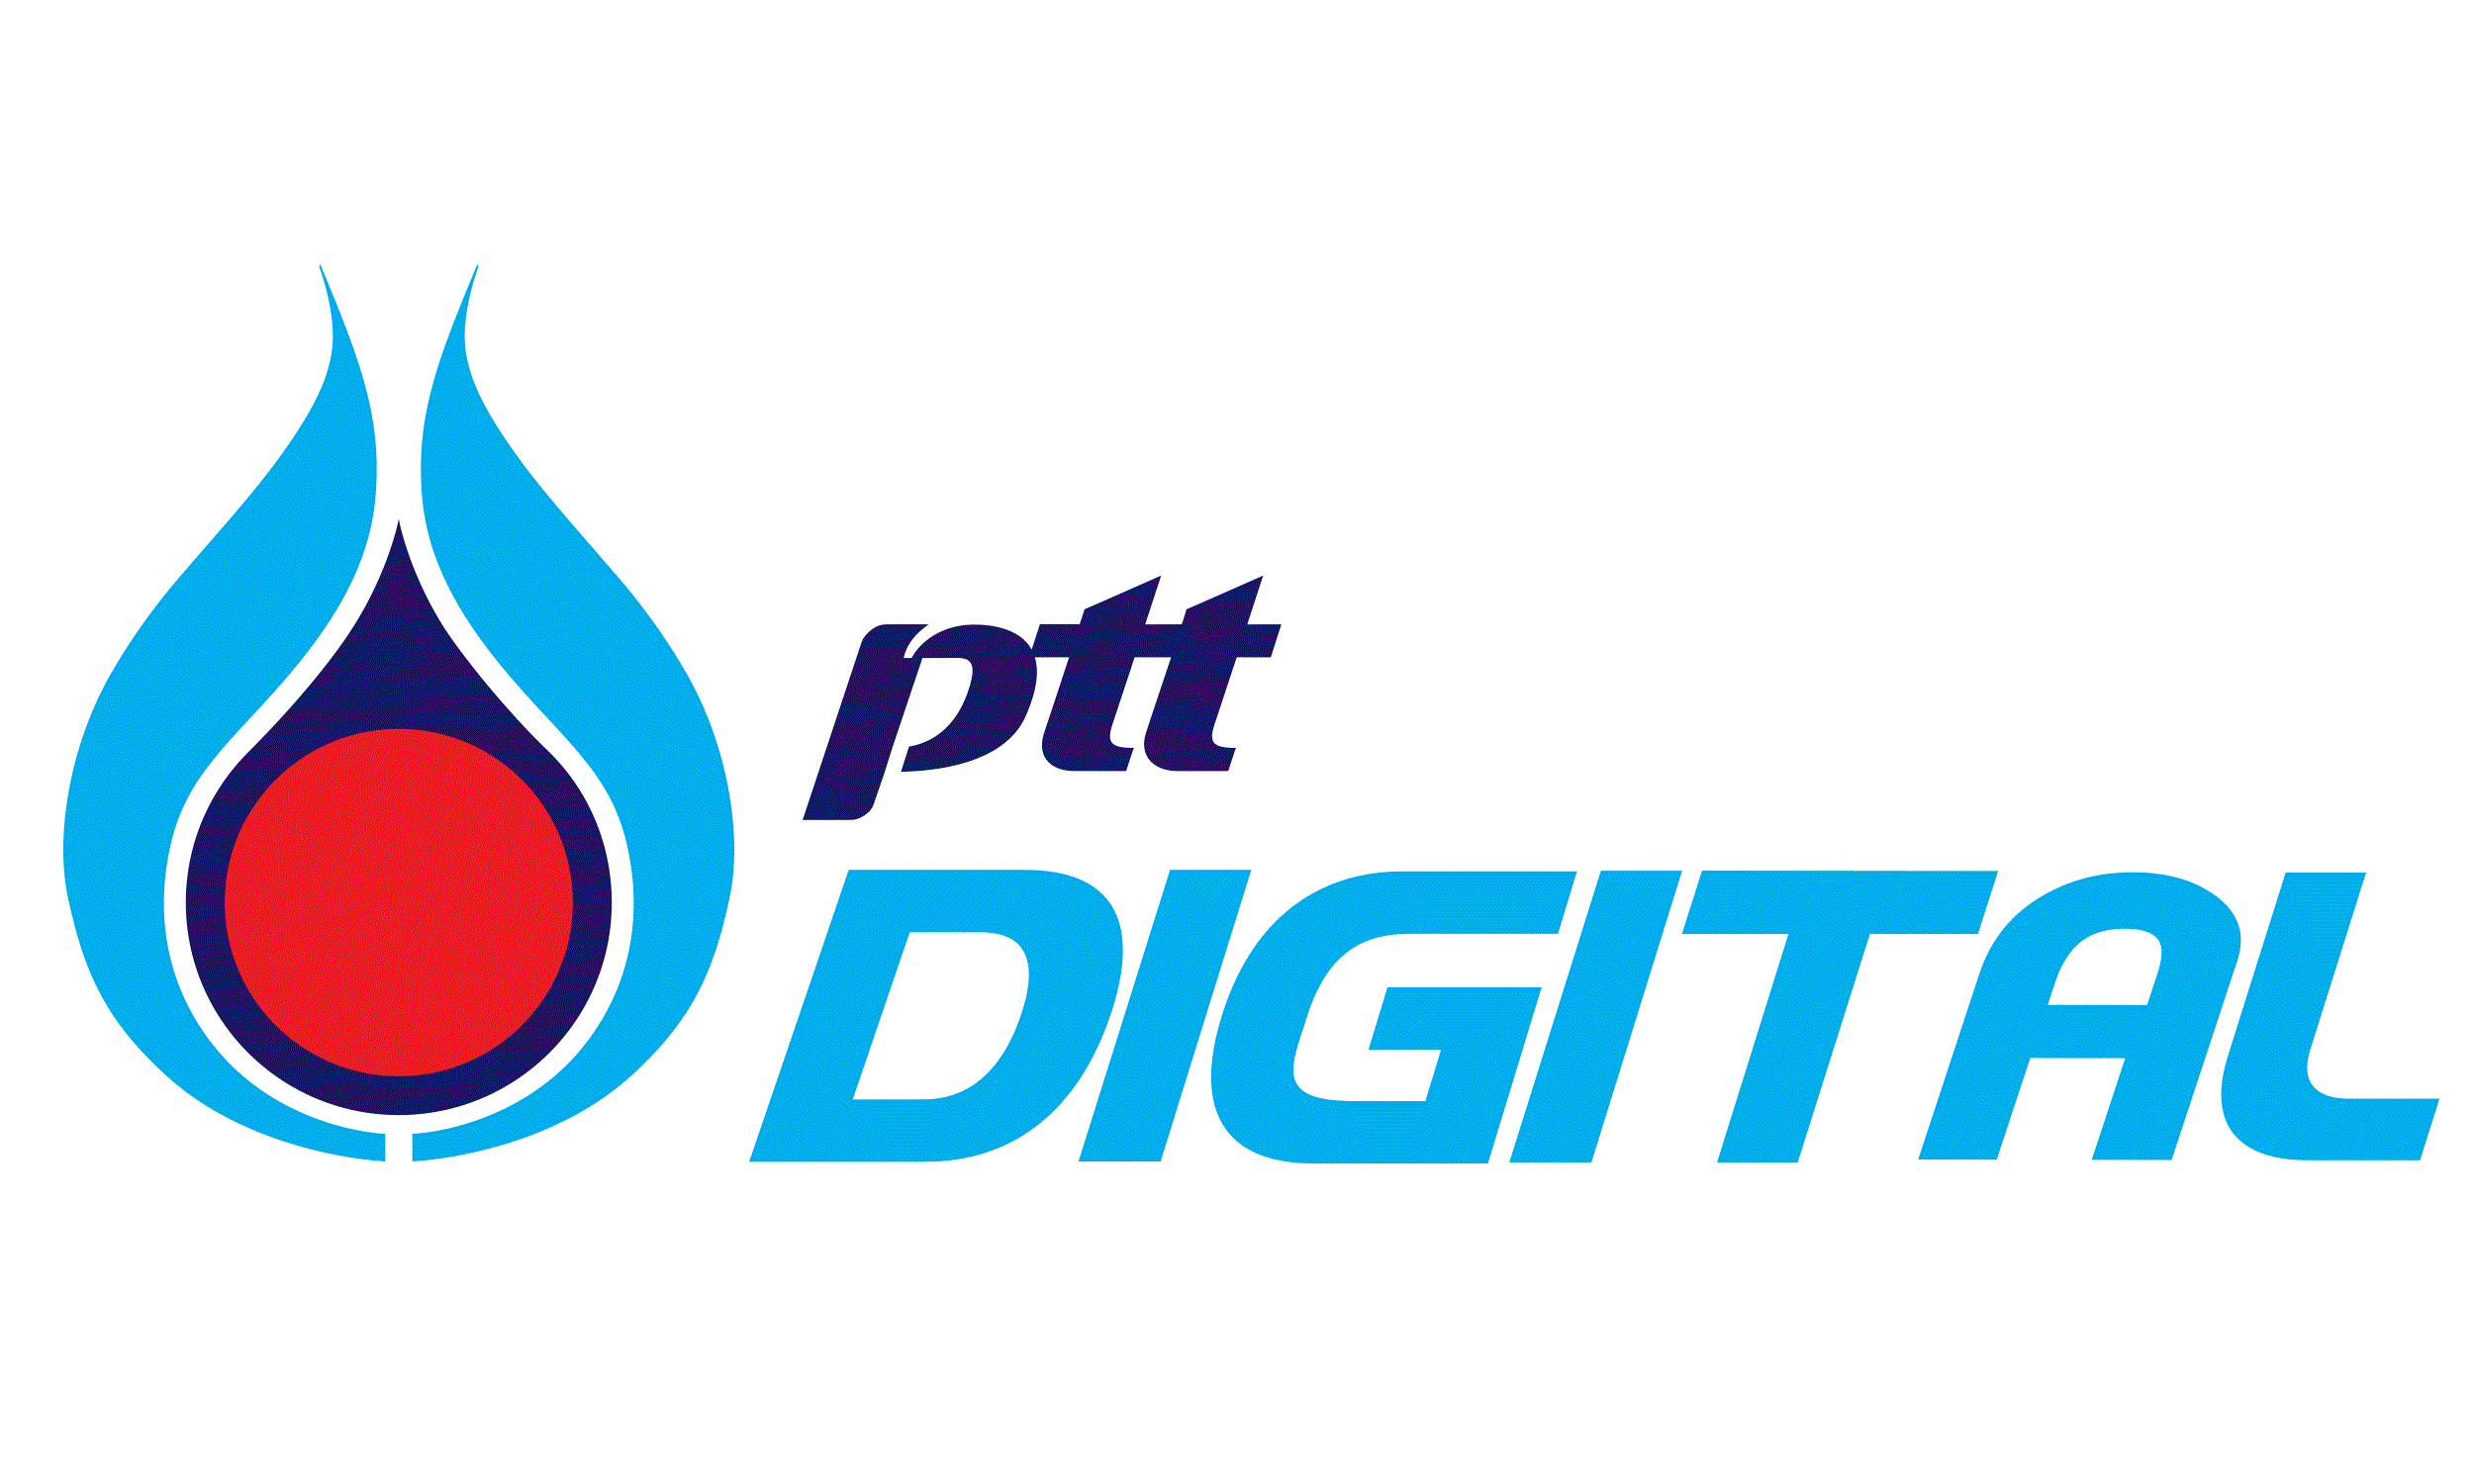 PTT logo